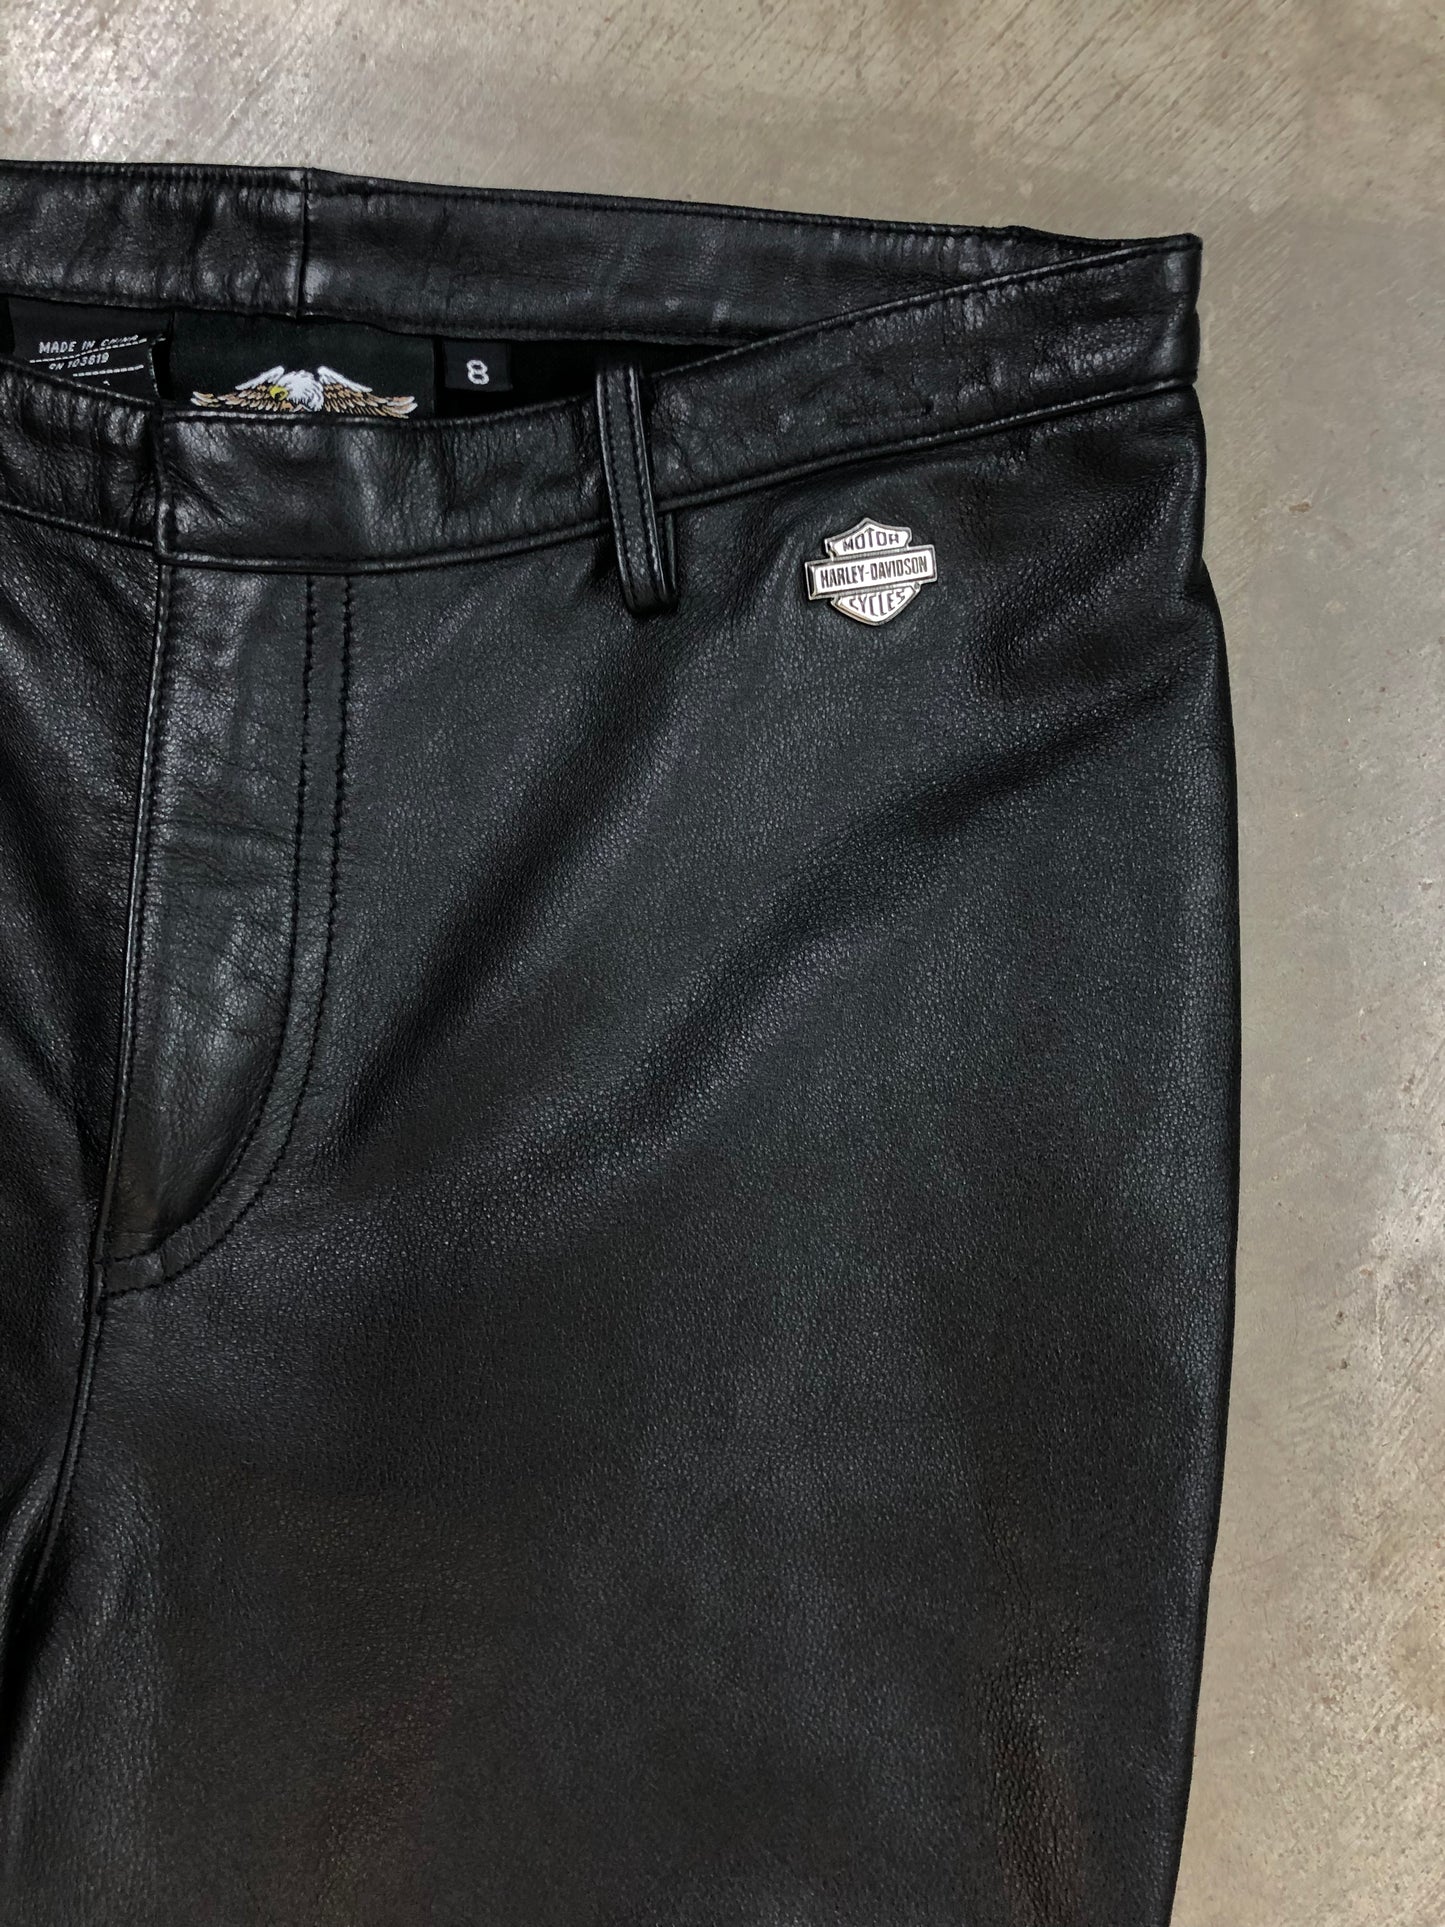 Harley Davidson Leather Front Riding Pants Sz 30x32